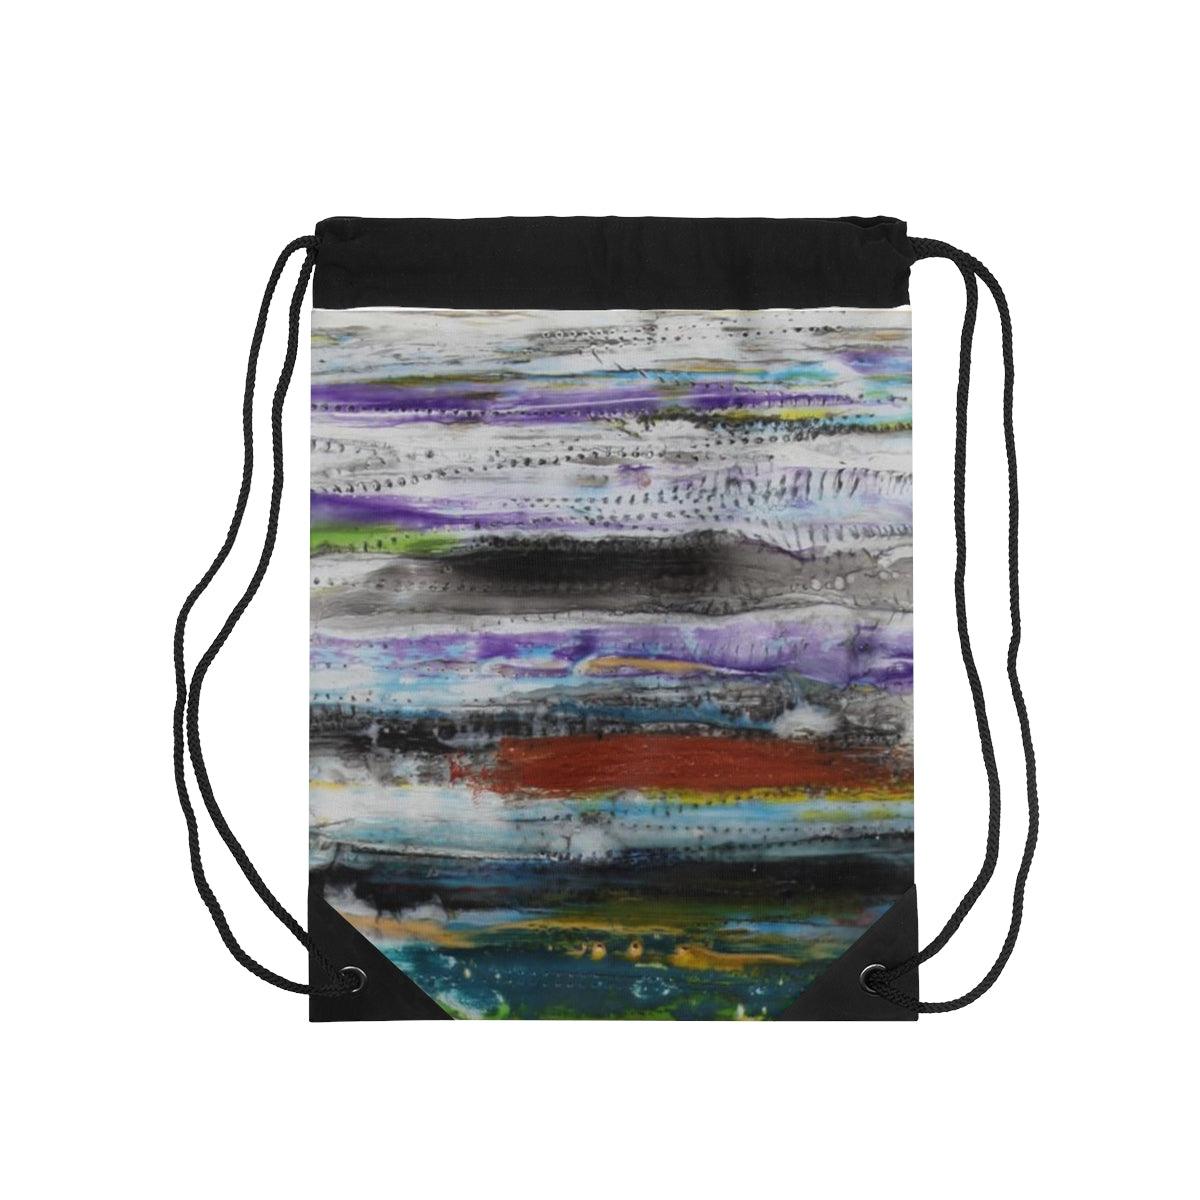 "Crossroads" Drawstring Bag-Bags - Mike Giannella - Encaustic Painting - Mixed Media Artist - Art Prints